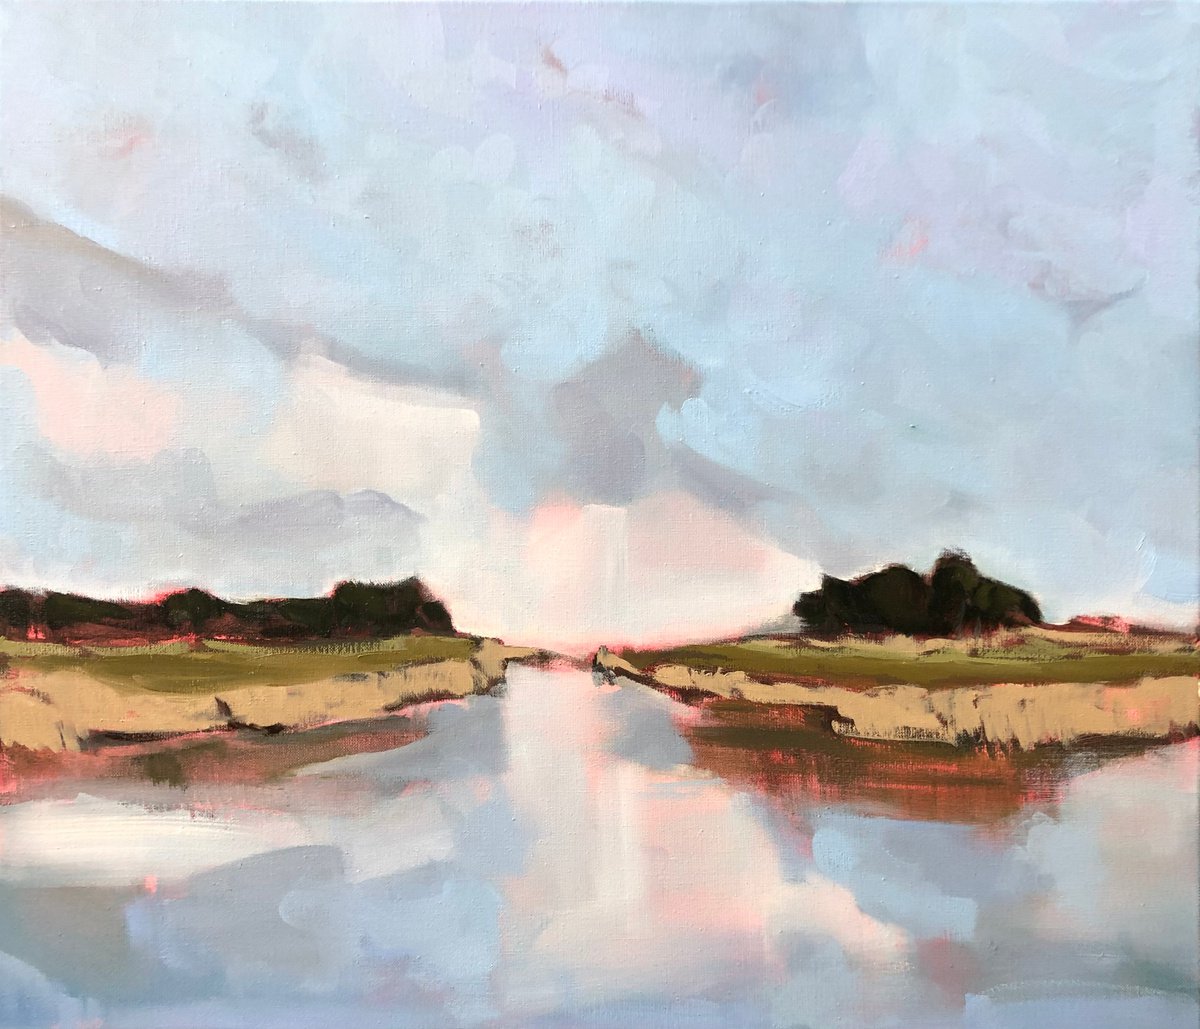 Reflecting clouds by Stella Burggraaf